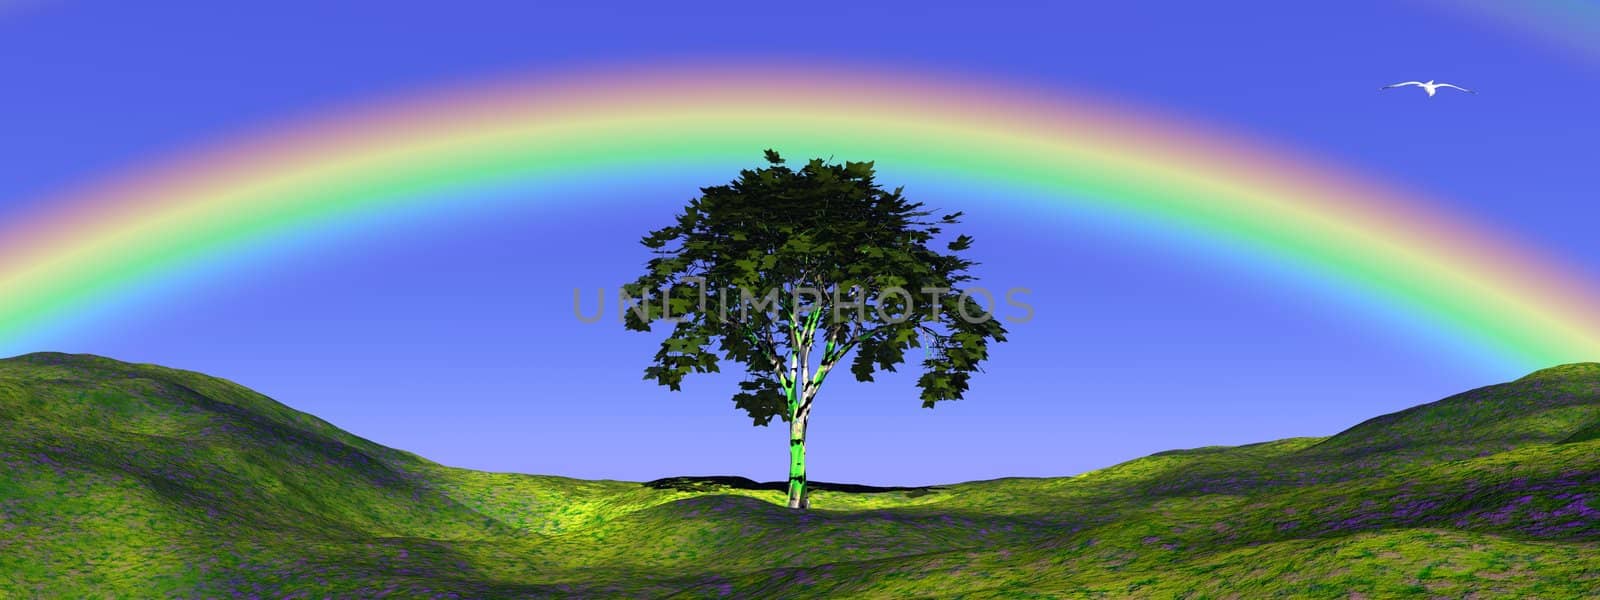 Tree under rainbow by Elenaphotos21